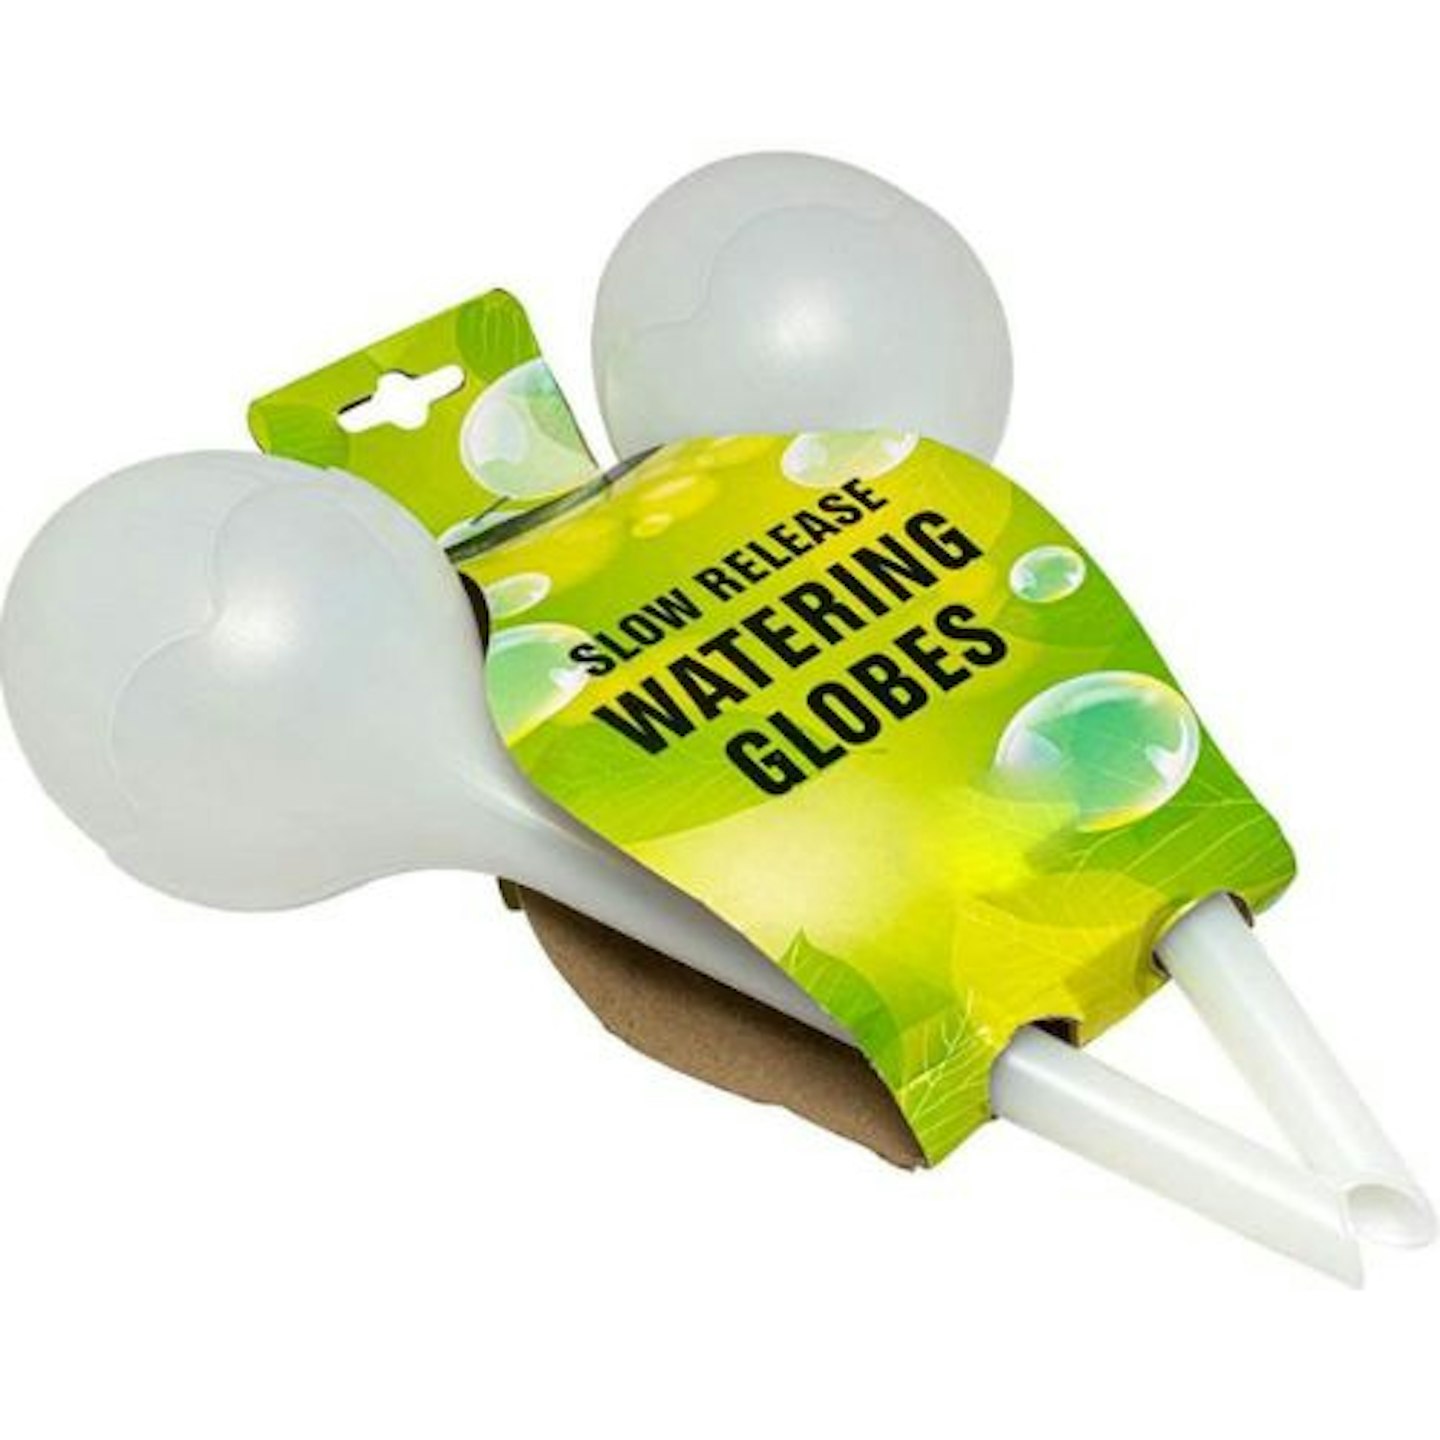 DIVCHI Self-Watering Globes